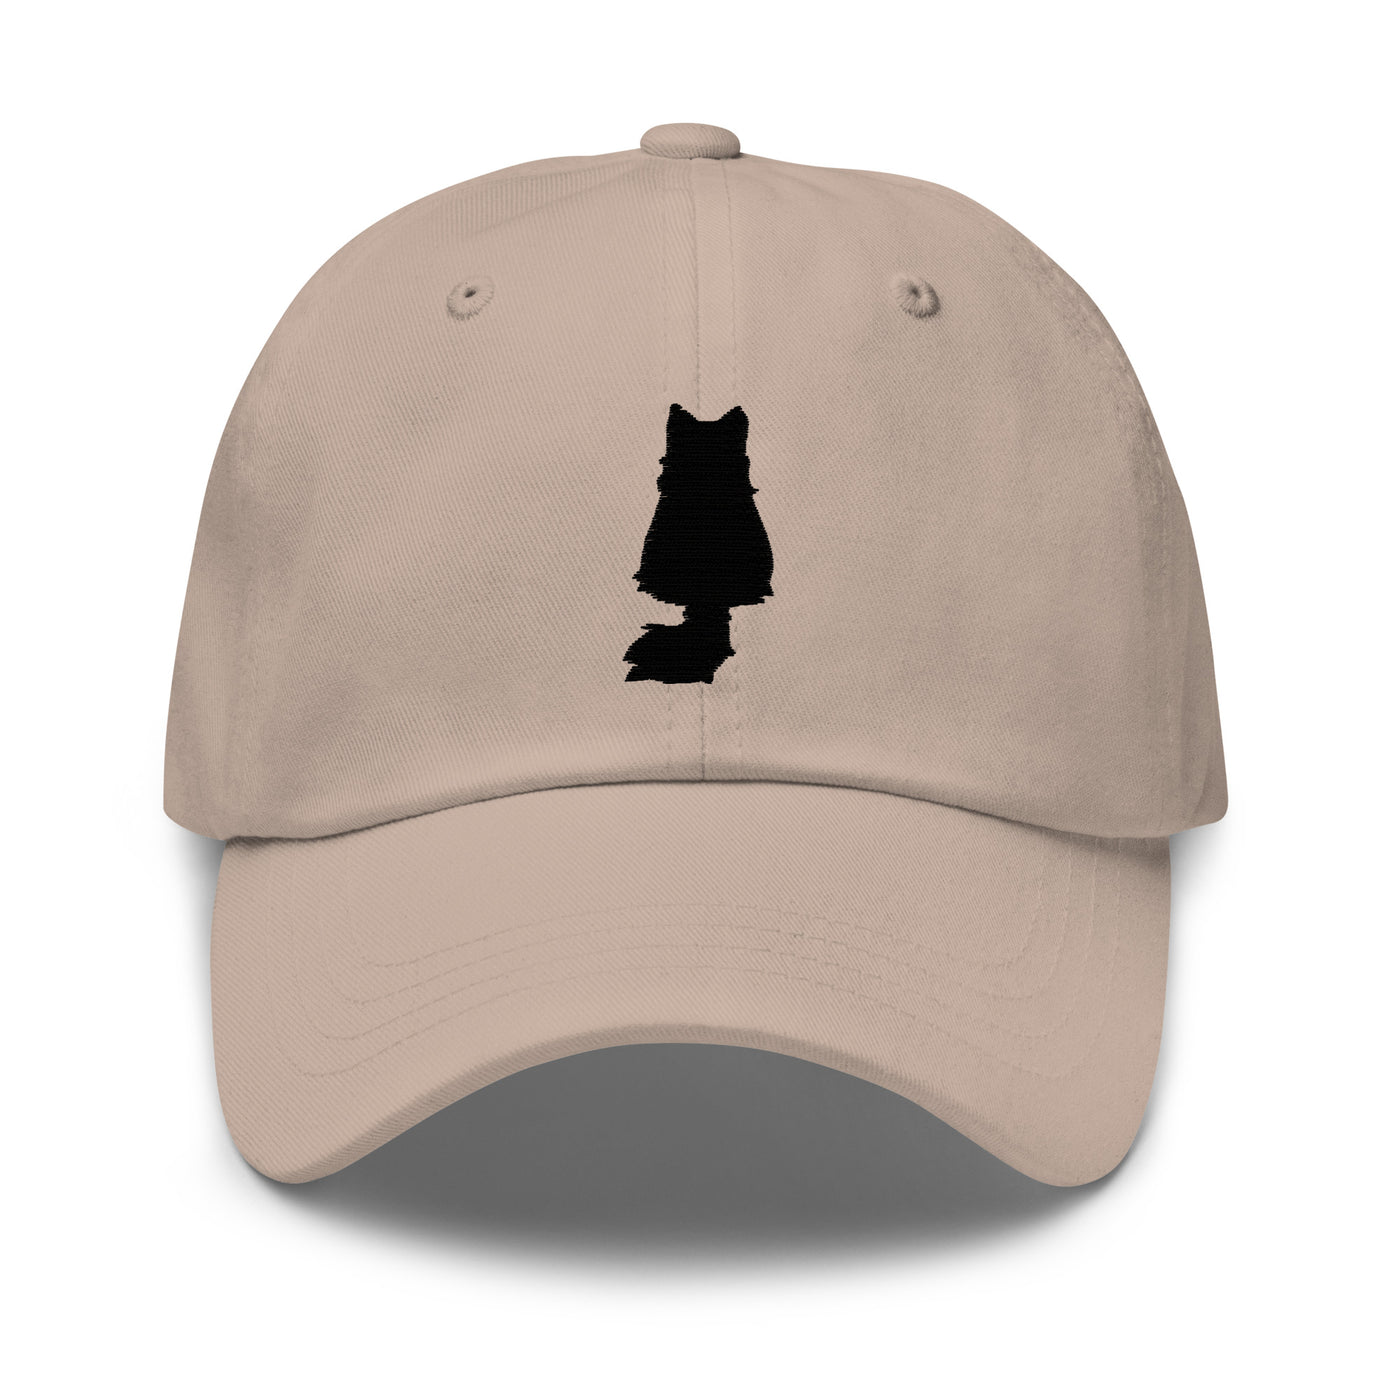 black cat hat | black cat embroidered hat | black cat embroidery | long haired black cat | I love black cat | Crazy cat lazy hat